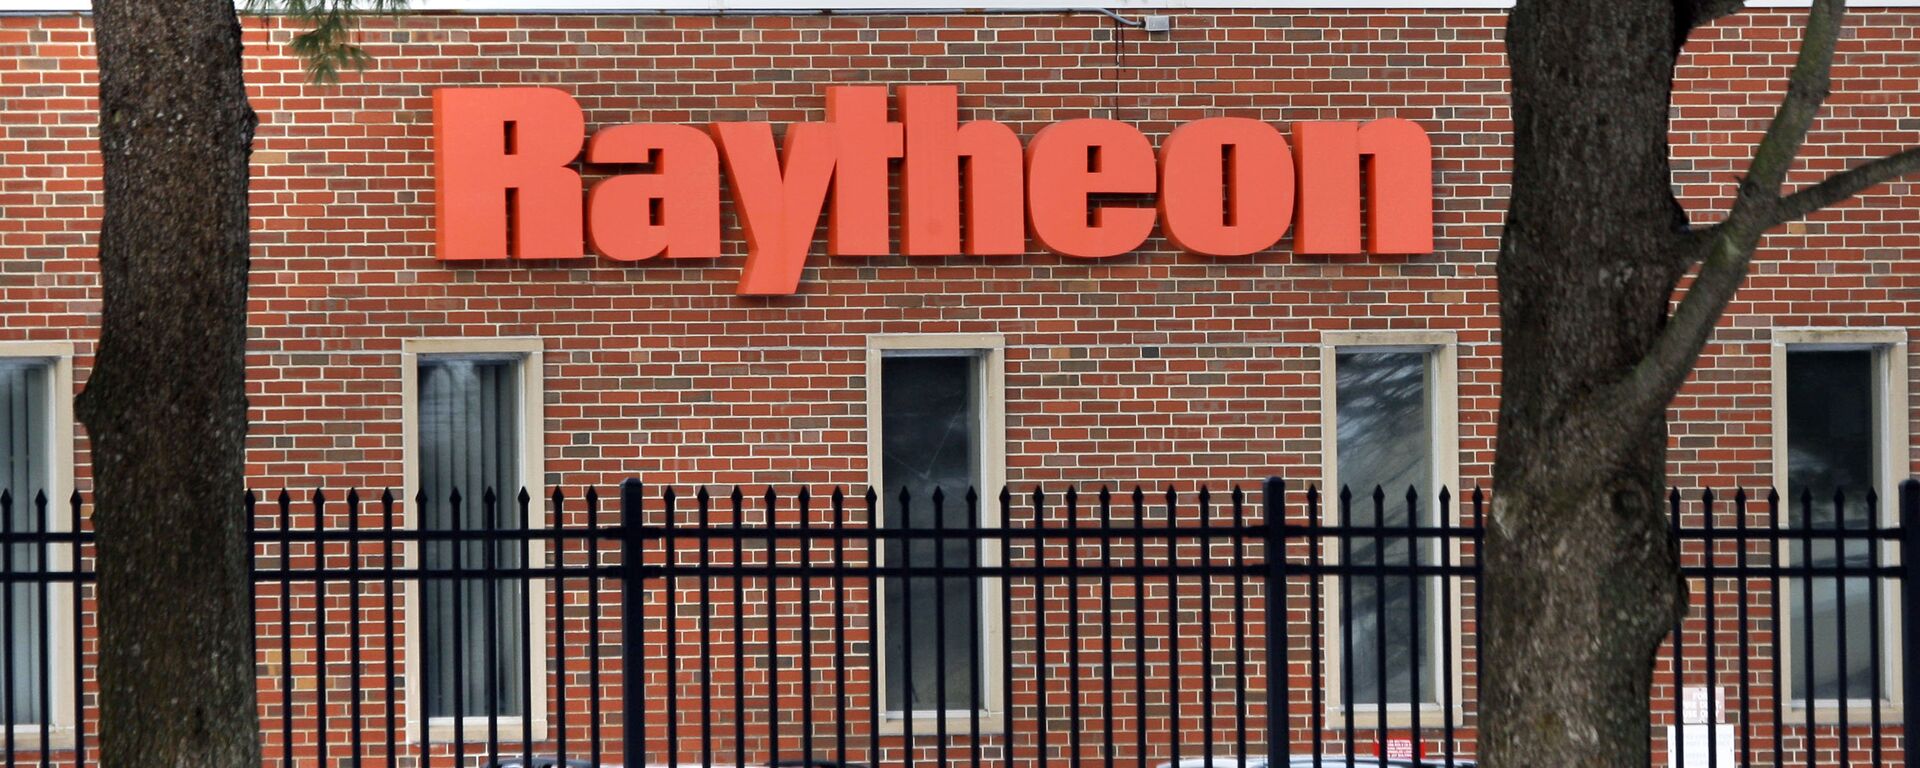 The exterior of Raytheon Co. in Sudbury, Mass. is seen Thursday, Jan. 29, 2009. - Sputnik International, 1920, 29.06.2023